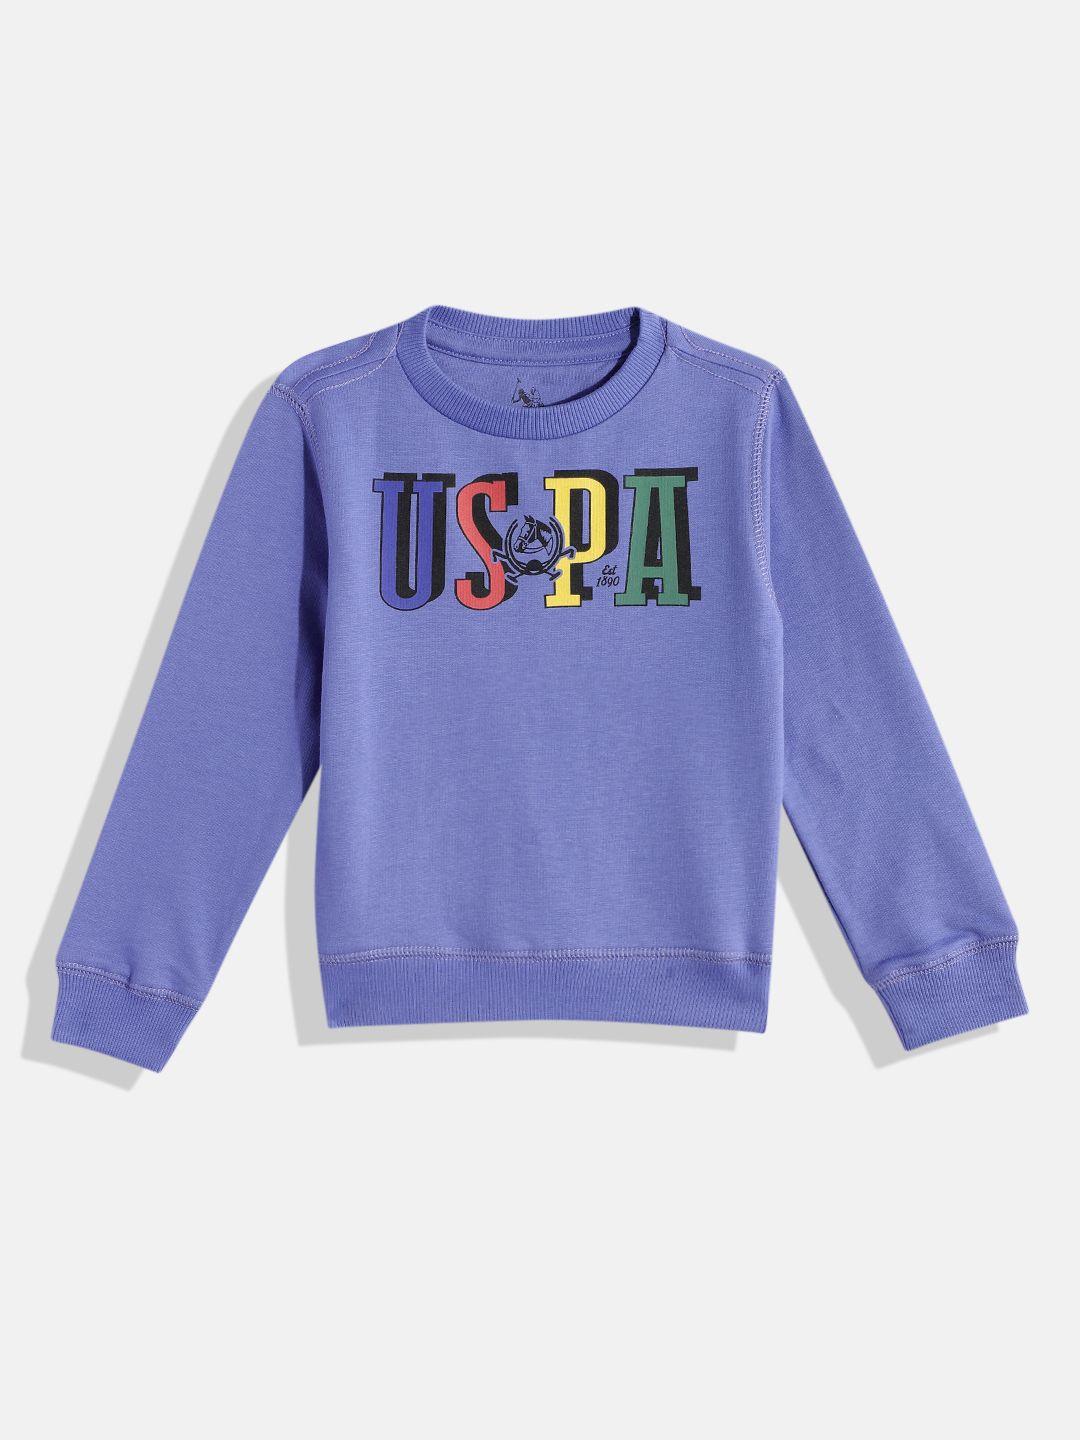 u.s. polo assn. kids boys purple printed pure cotton sweatshirt